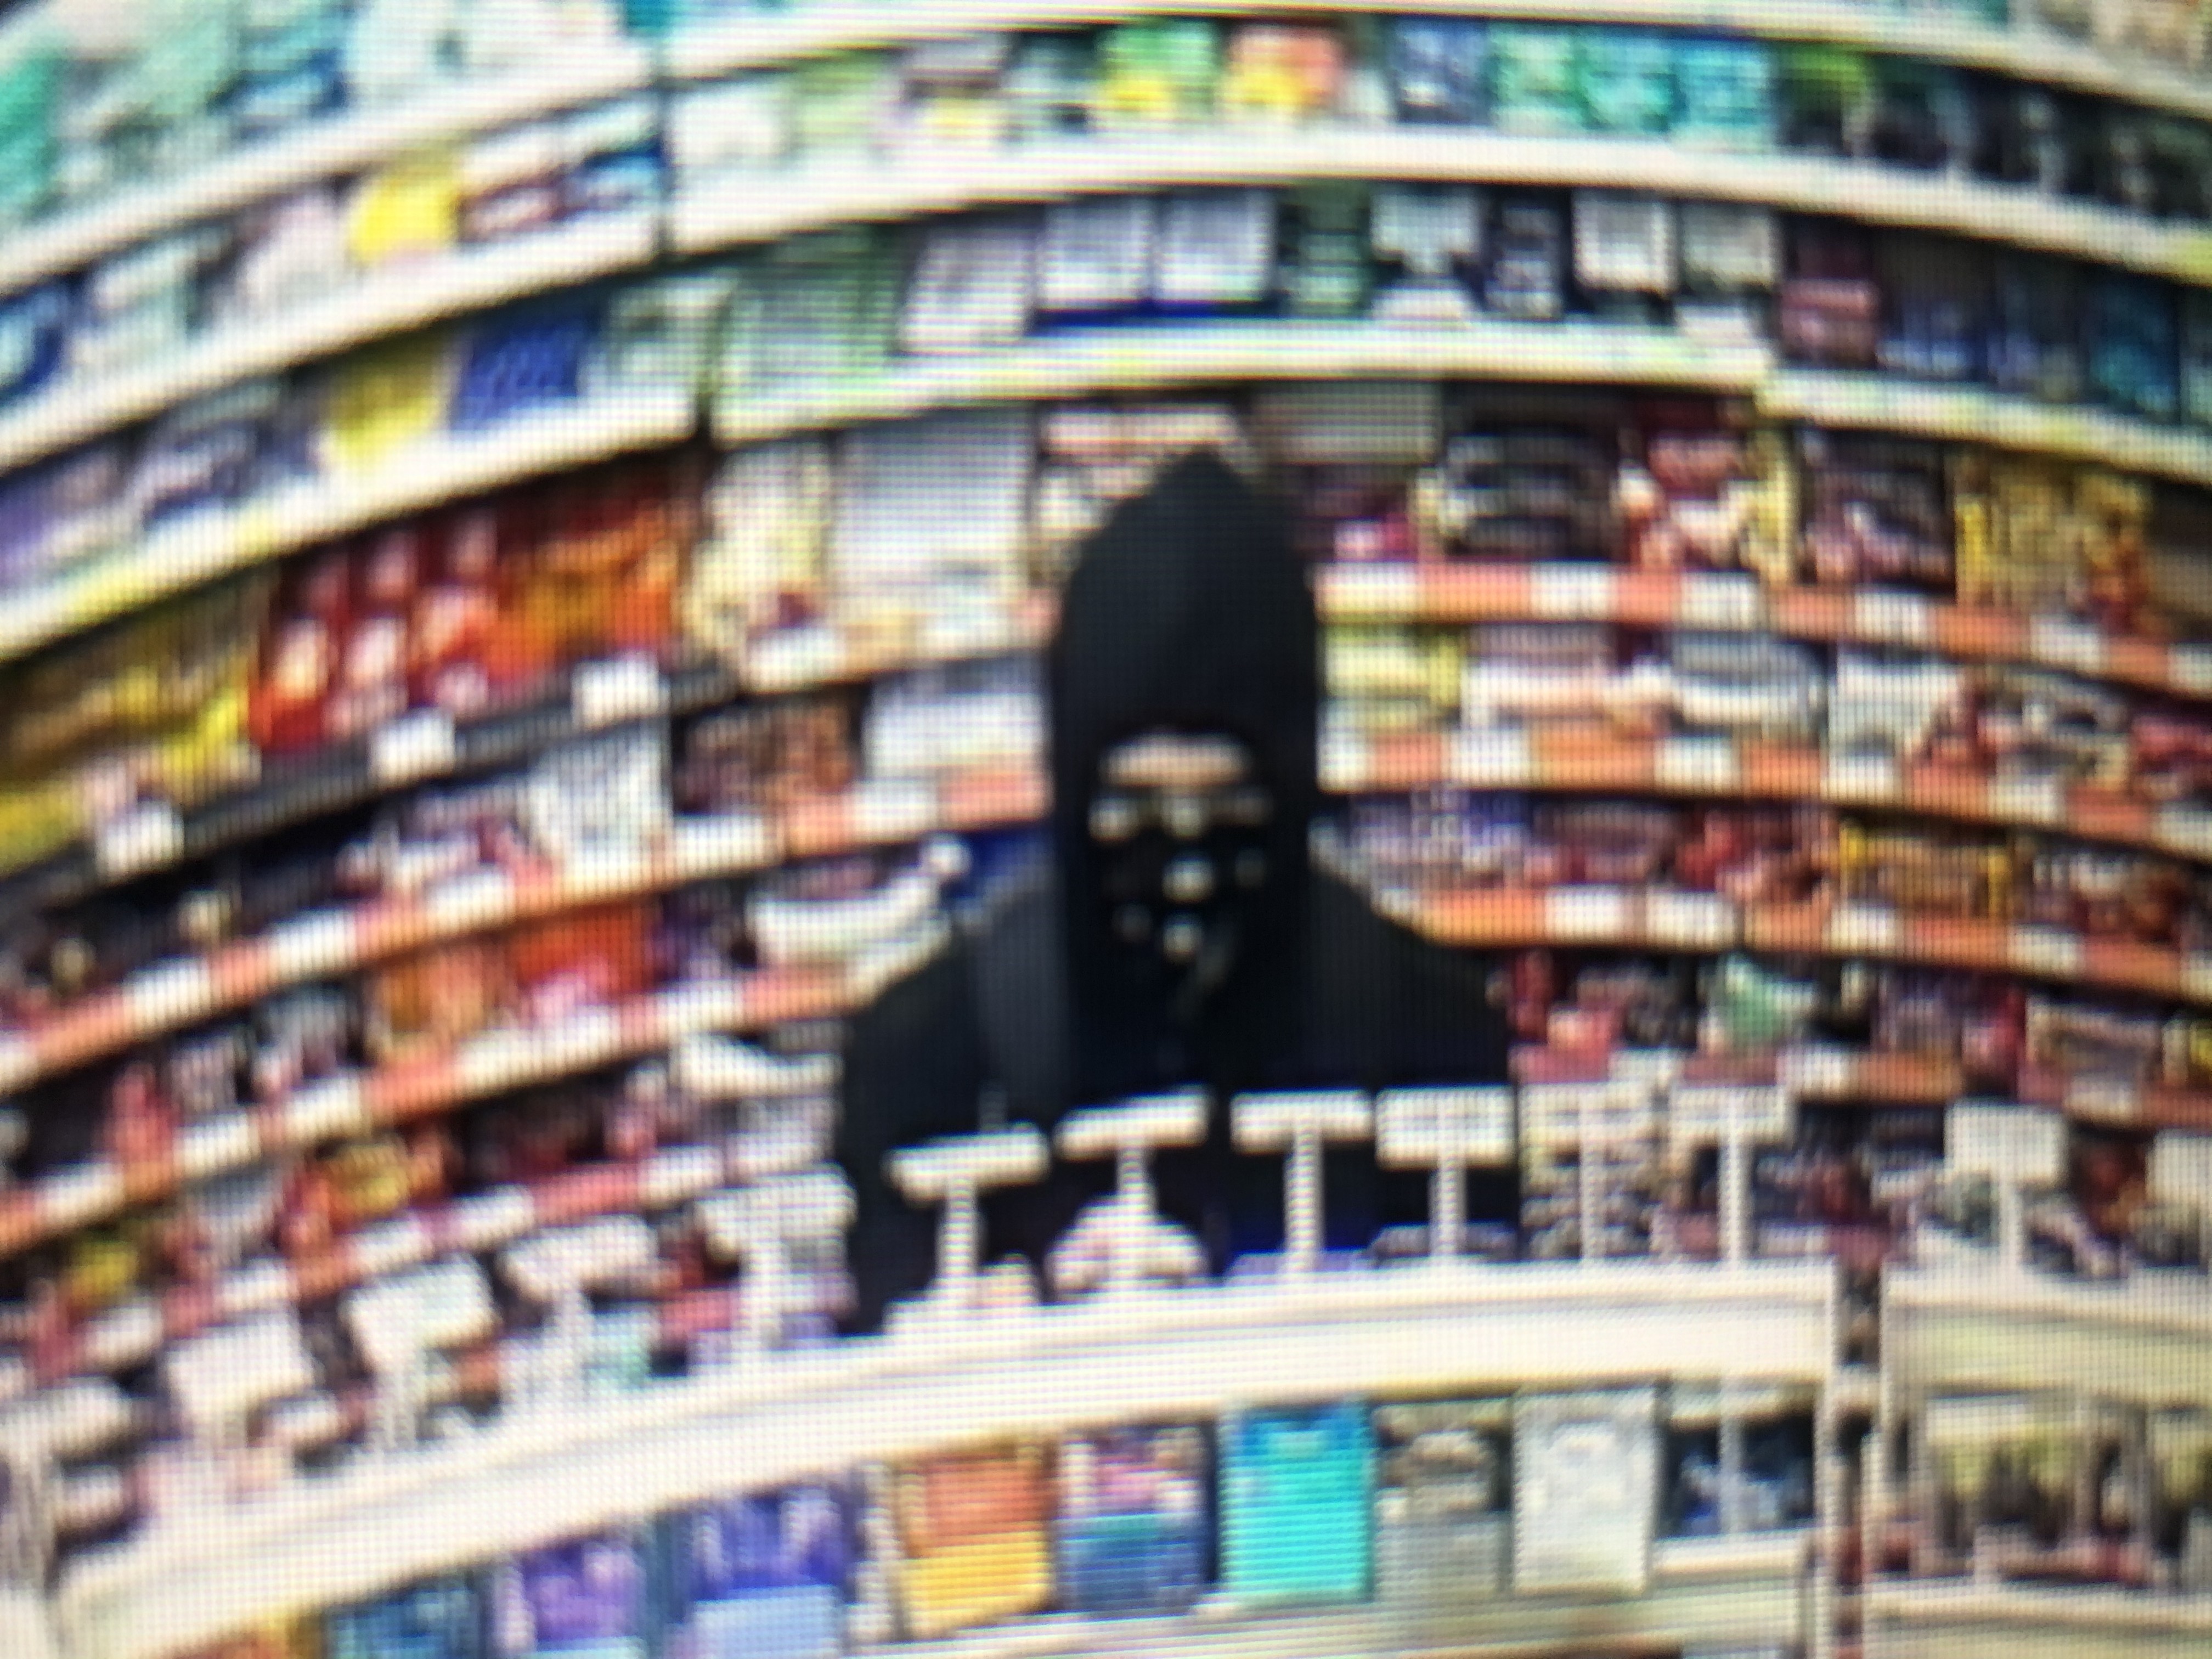 Image 4: Robbery Suspect